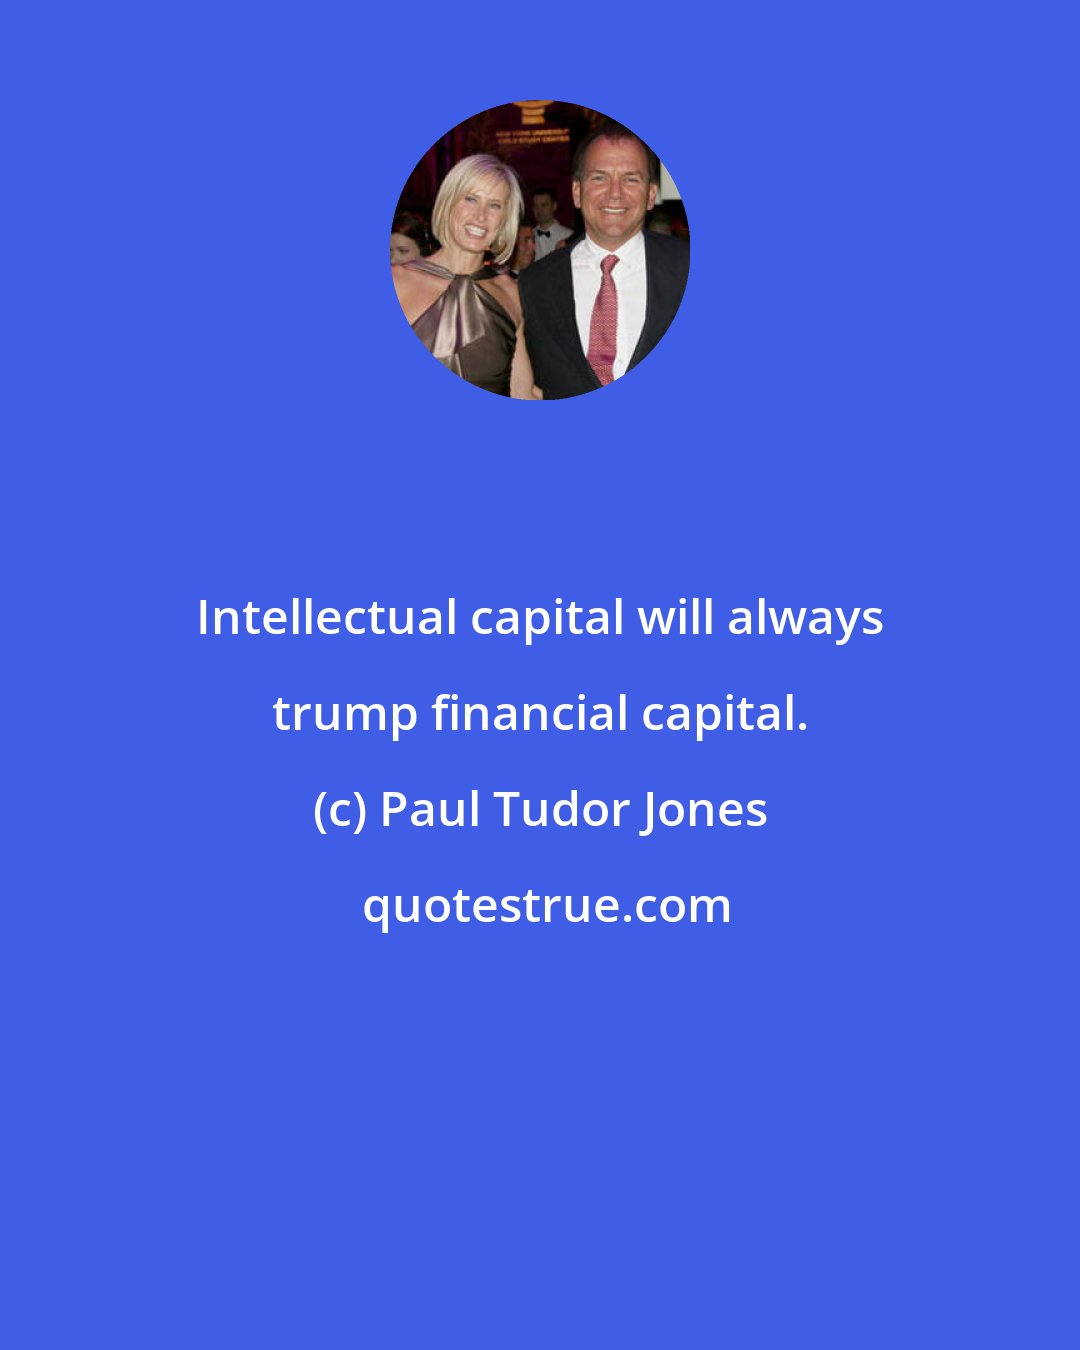 Paul Tudor Jones: Intellectual capital will always trump financial capital.